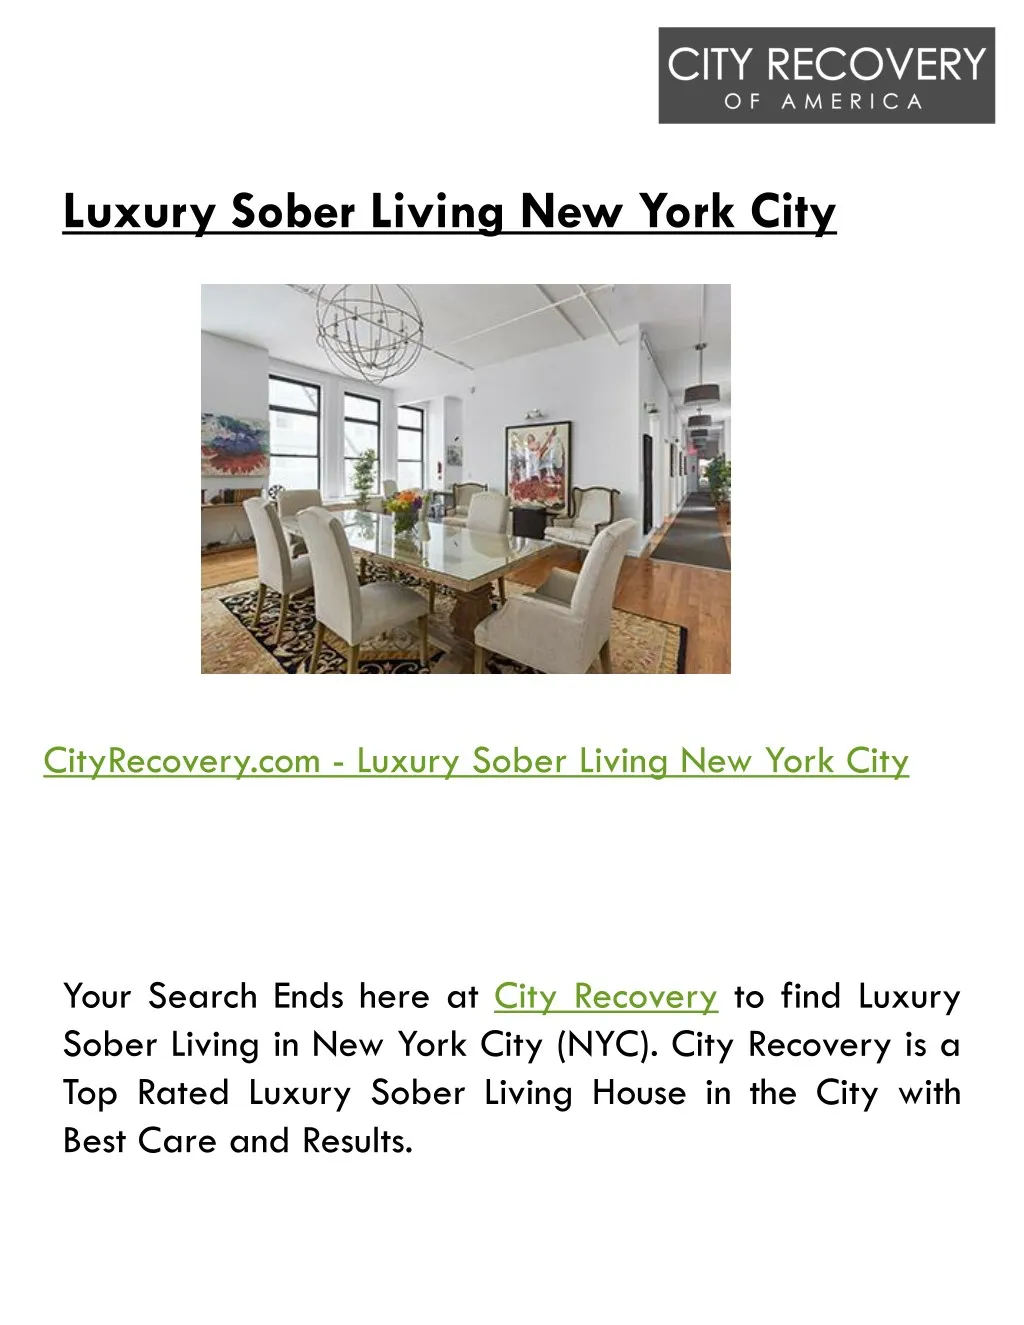 luxury sober living new york city